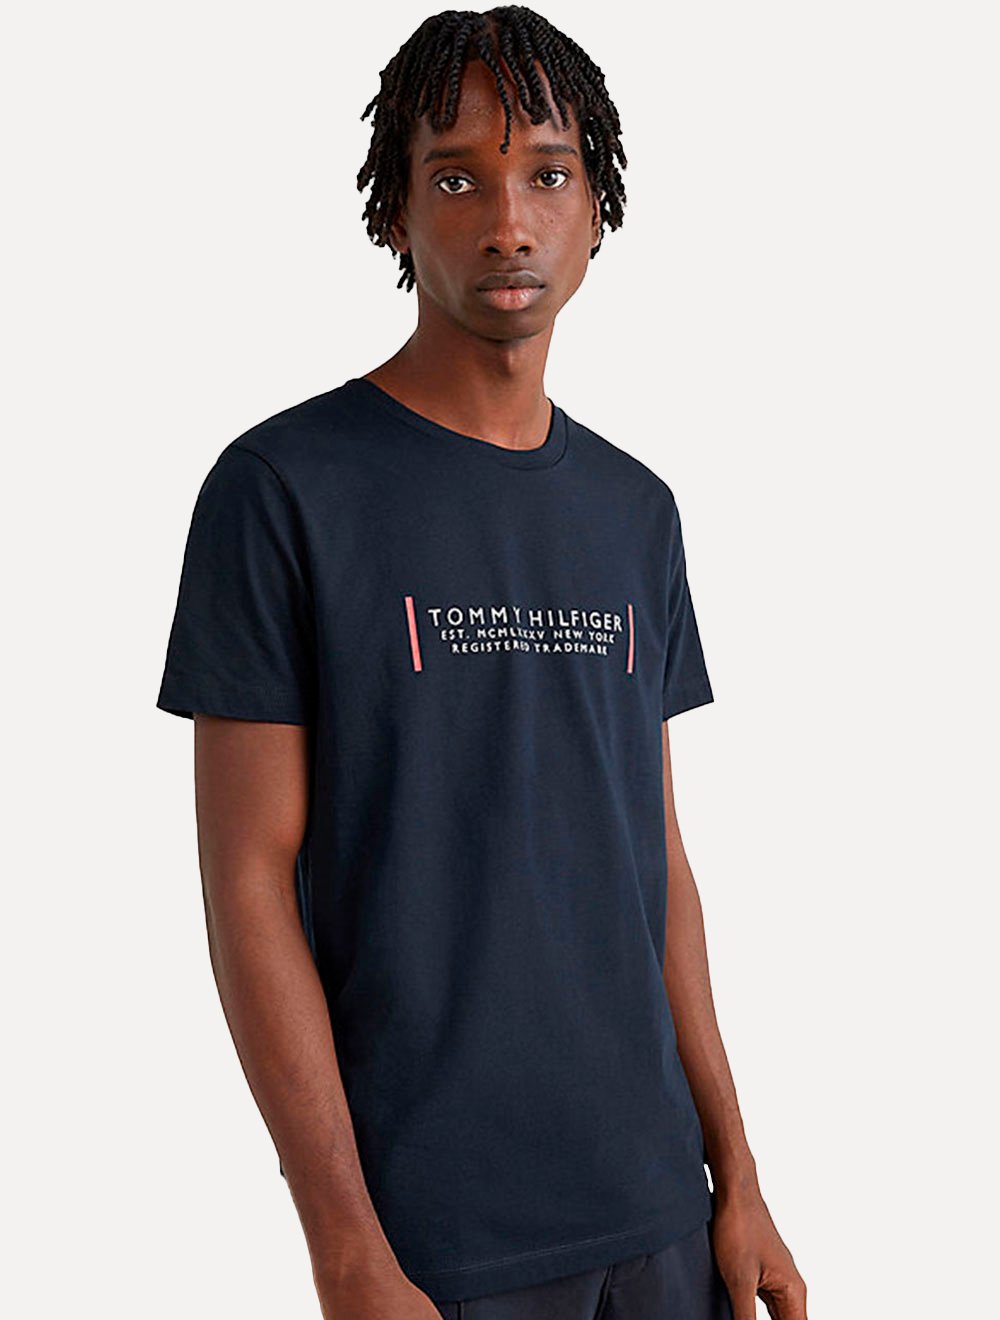 Camiseta Tommy Hilfiger Masculina Text Bar Corp Azul Marinho